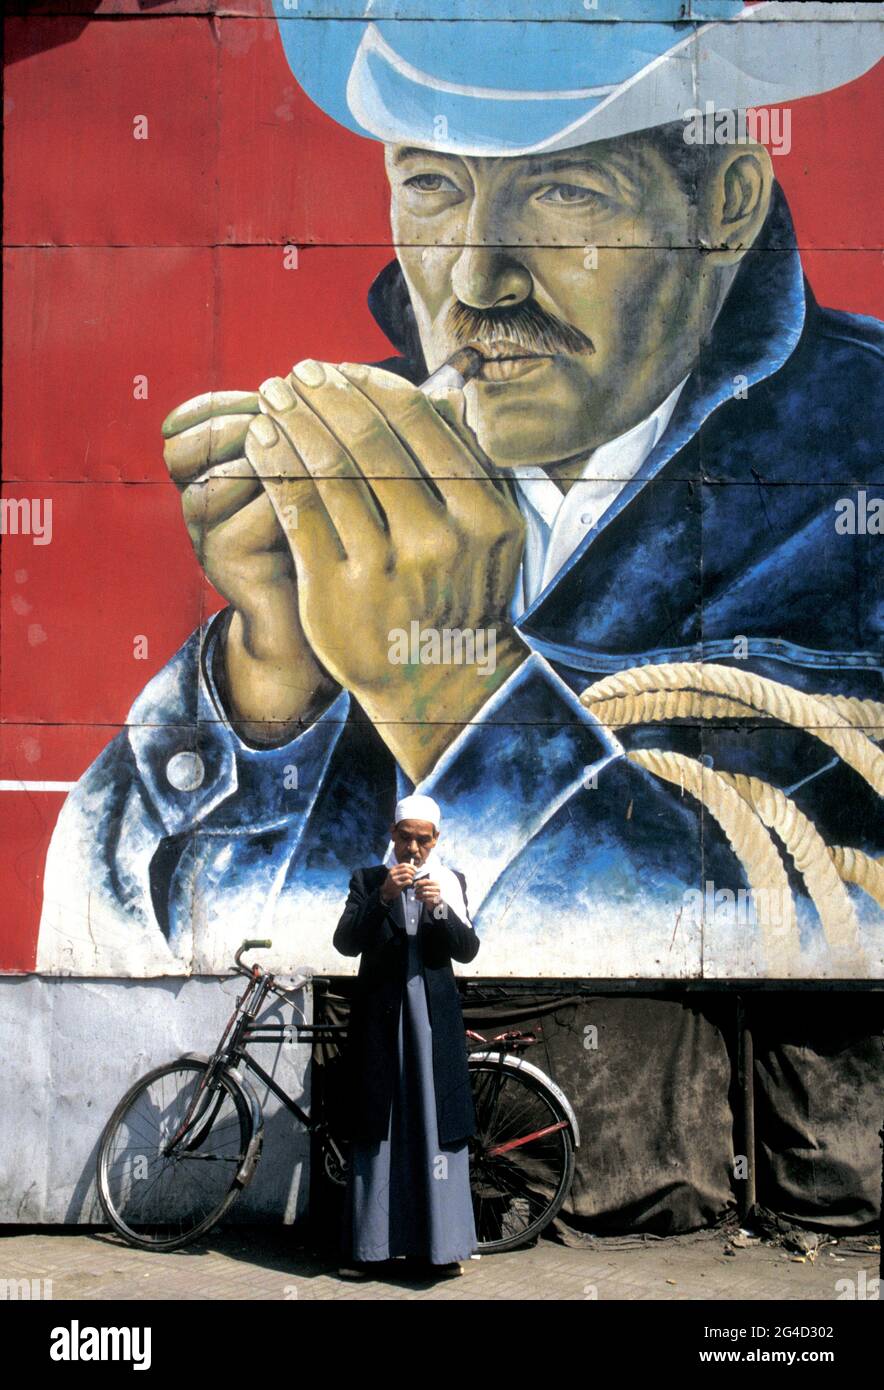 Man lighting cigarette beneath the Marlboro poster in Cairo, Egypt Stock Photo